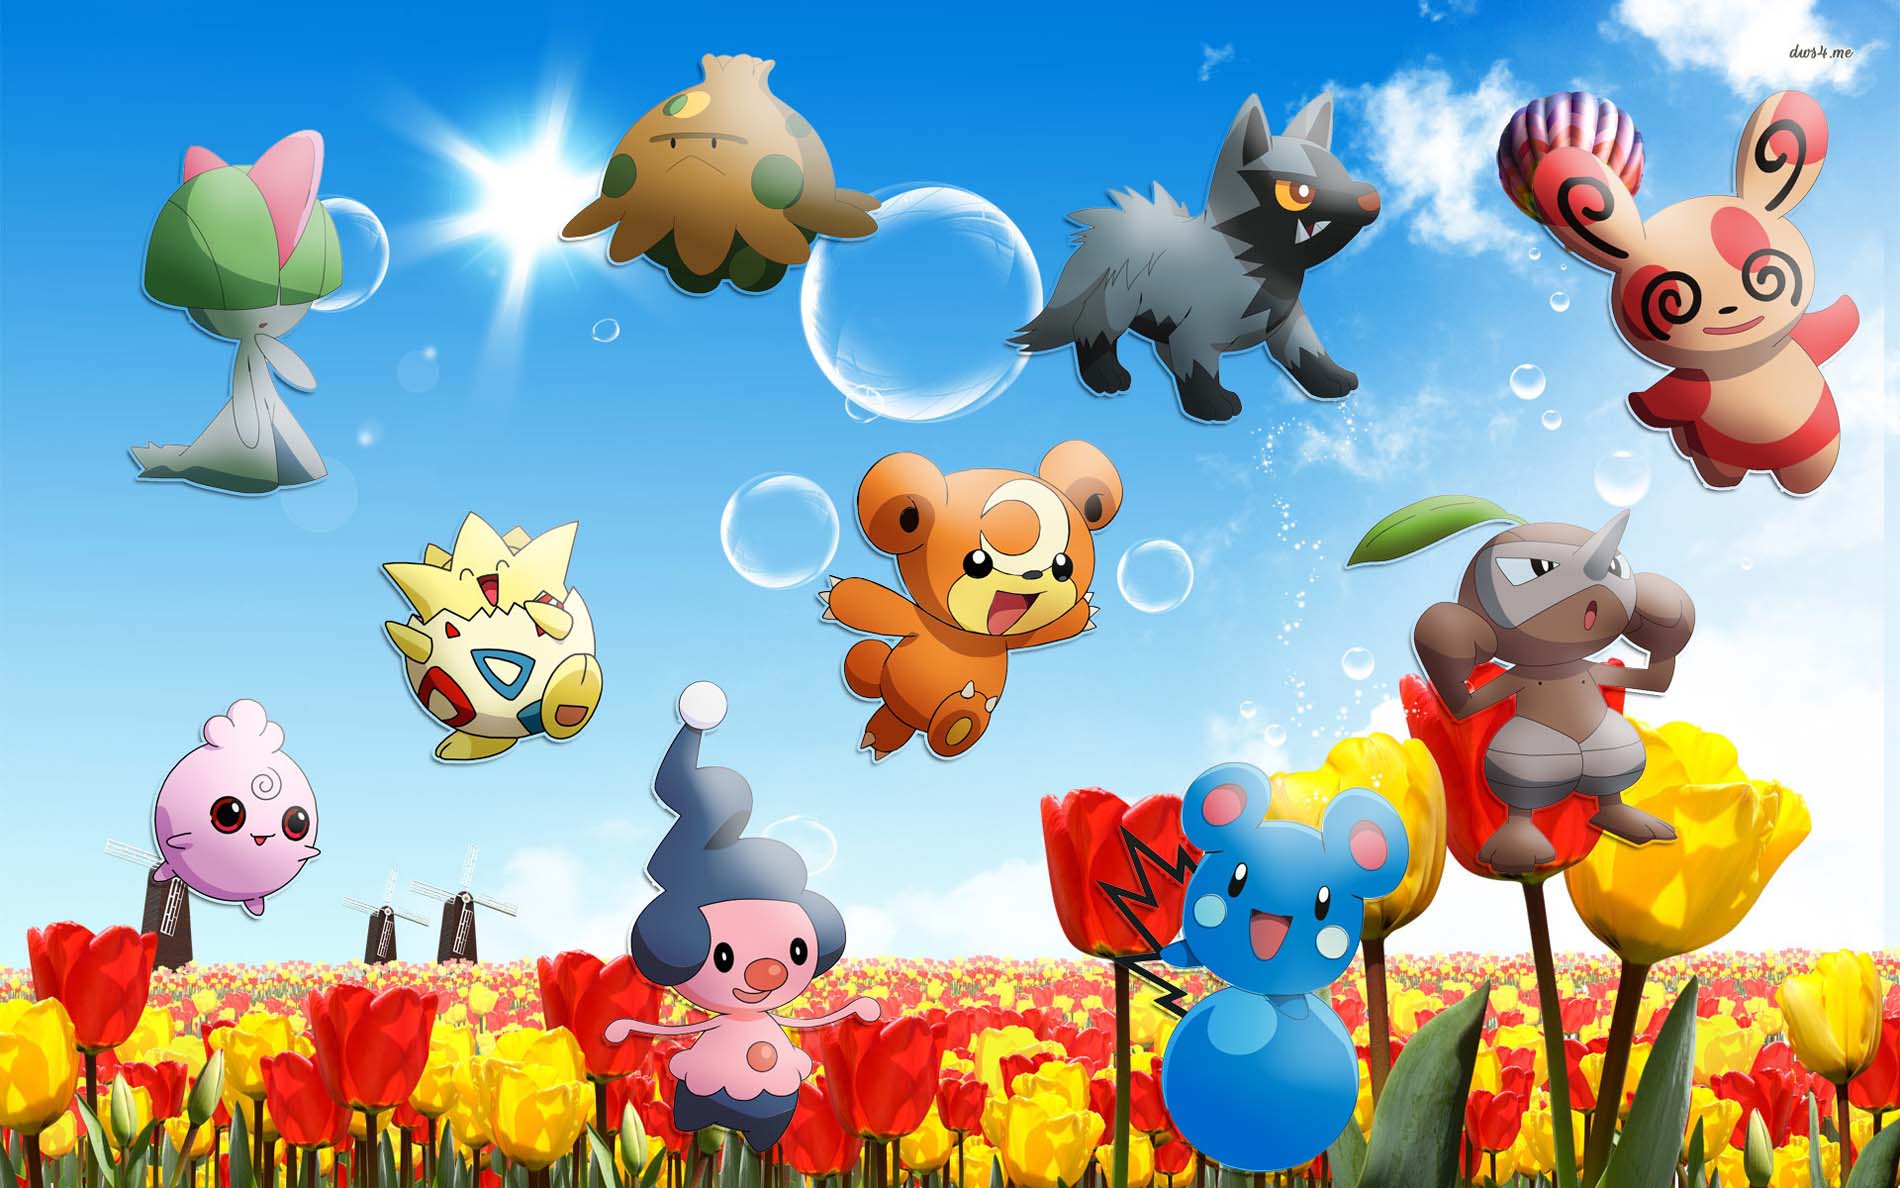 Free Easter Wallpaper Background. wallaadoo. Cute pokemon